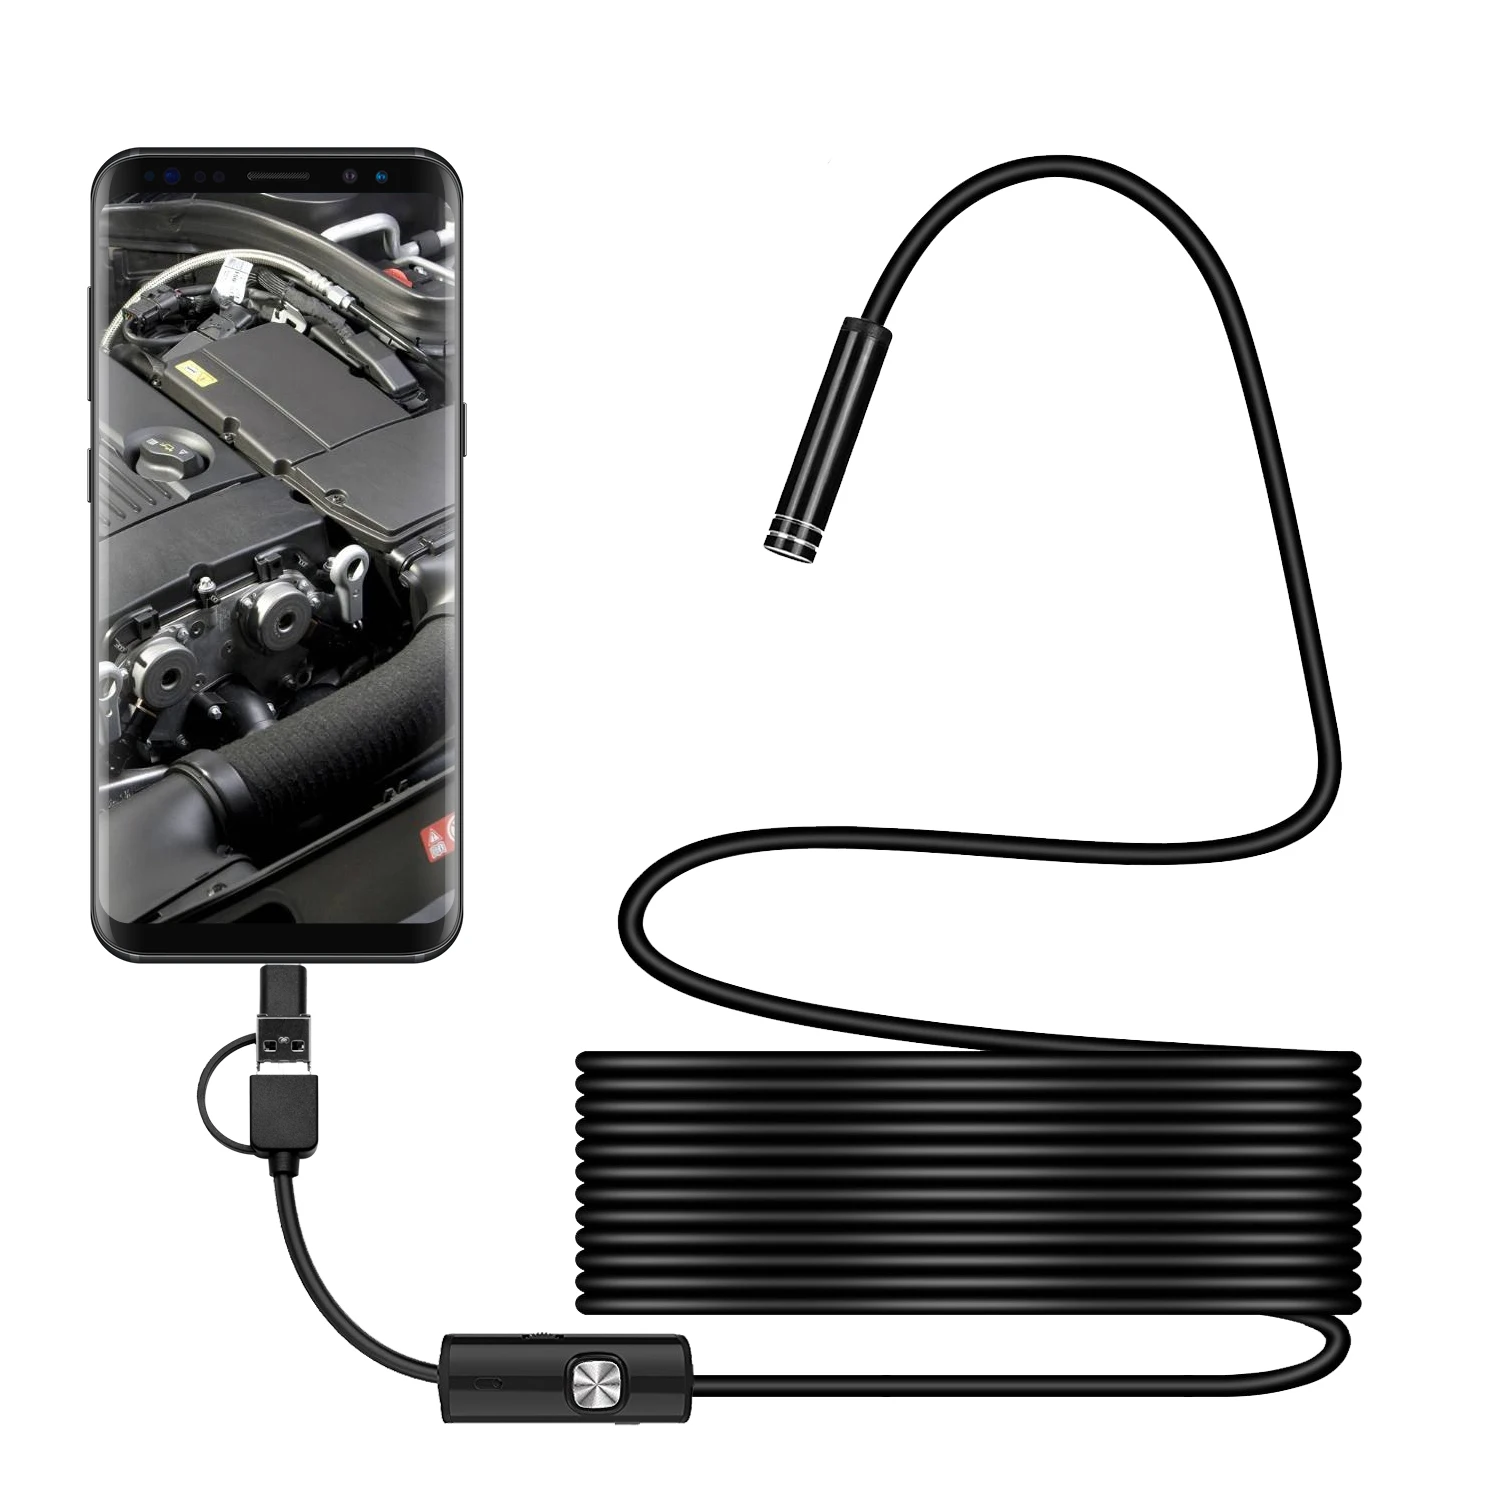 Эндоскоп 3.5м Deko we-3.5. USB камера эндоскоп для андроид. USB Camera для эндоскопа. Камера - гибкий эндоскоп USB (Micro USB), 2м, Android/PC. Эндоскоп для телефона андроид